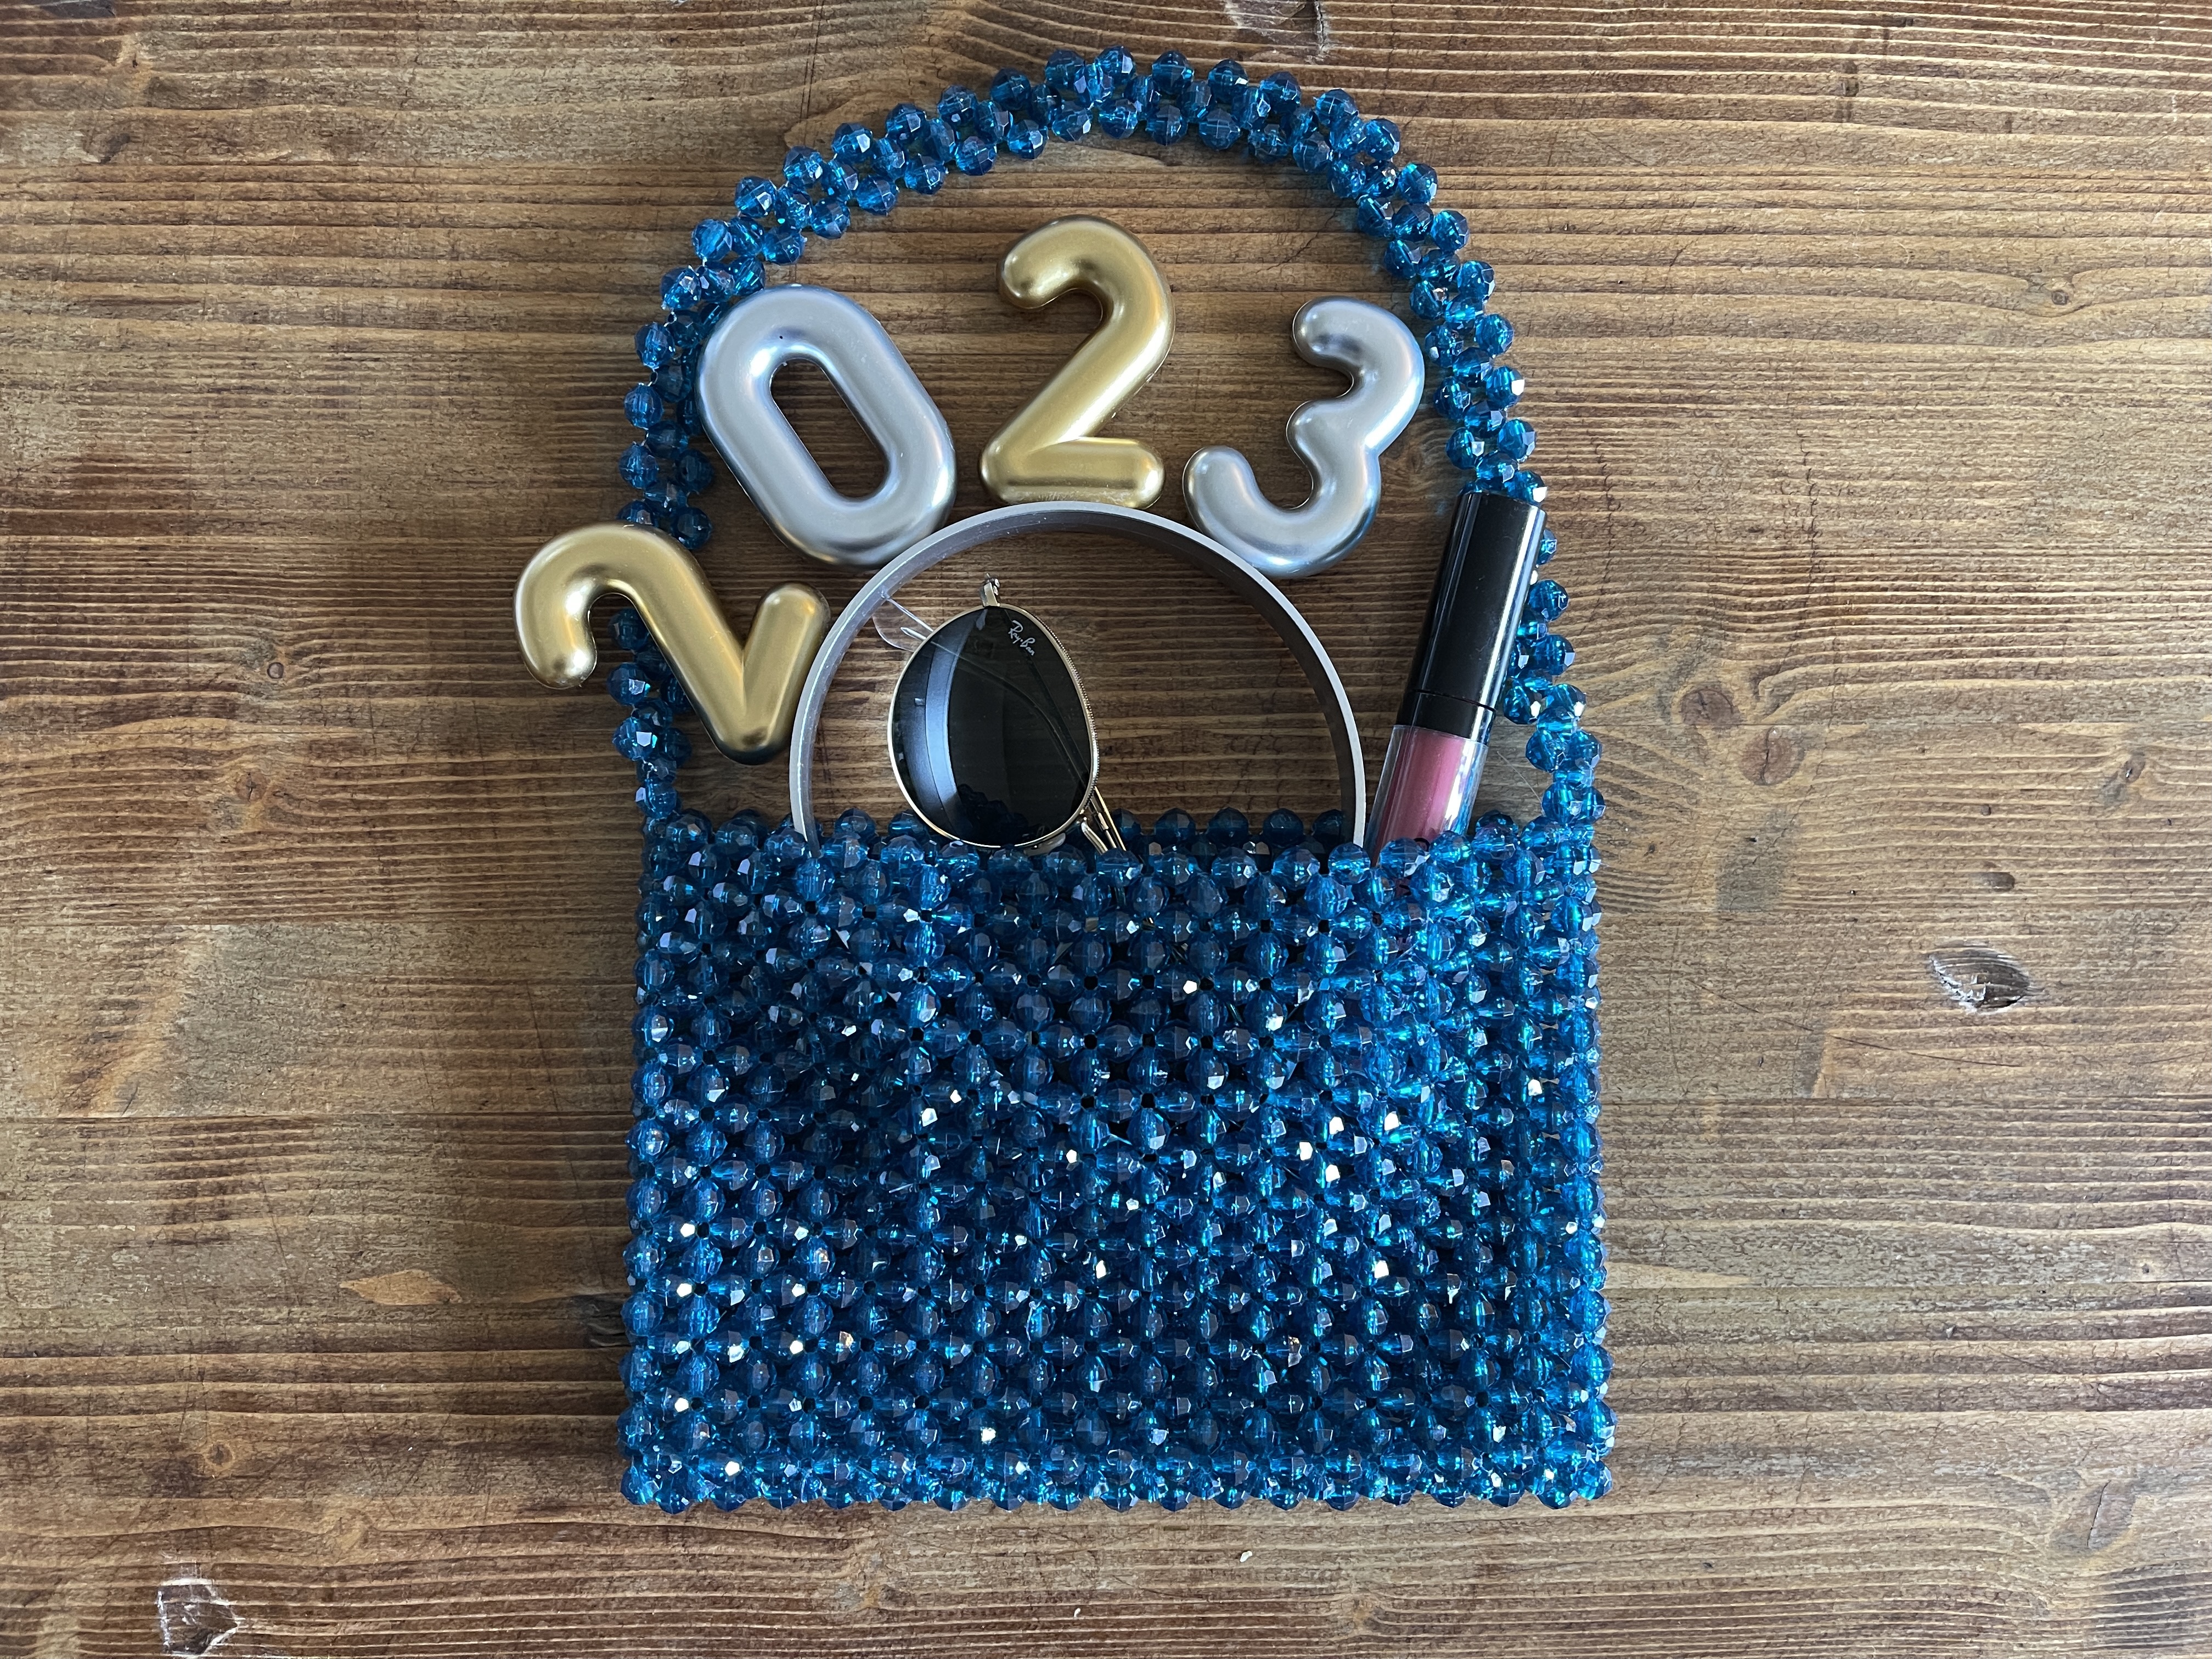  Handmade DIY Bag Pearl Chain Large Beads Chain Handbag